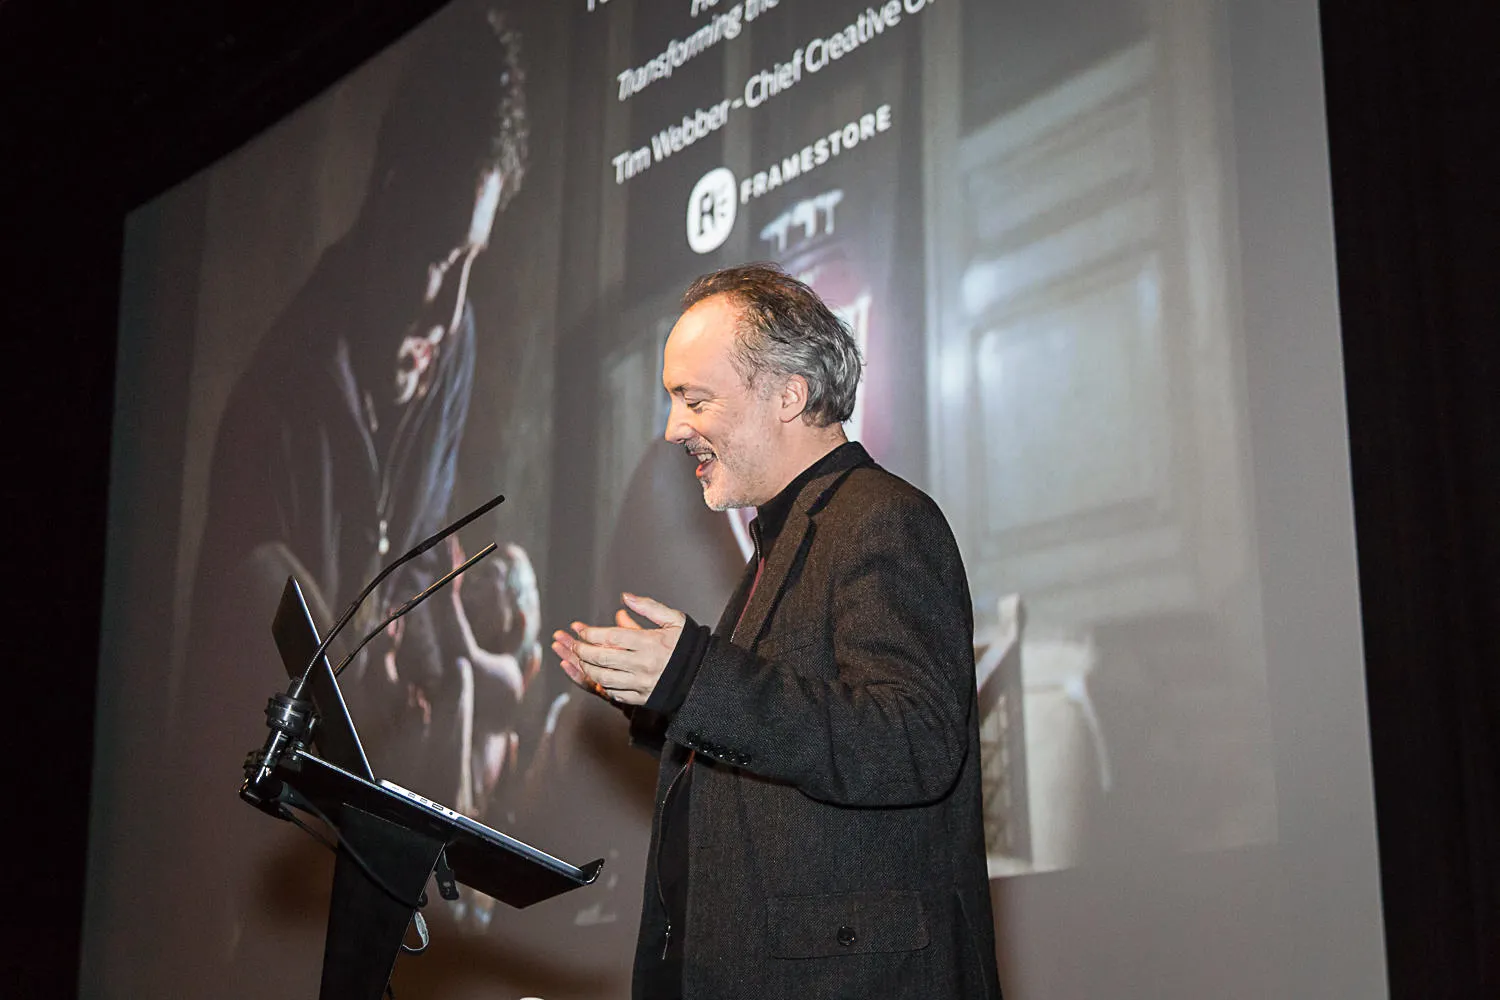 Tim Webber, speaking at the Future of Film summit